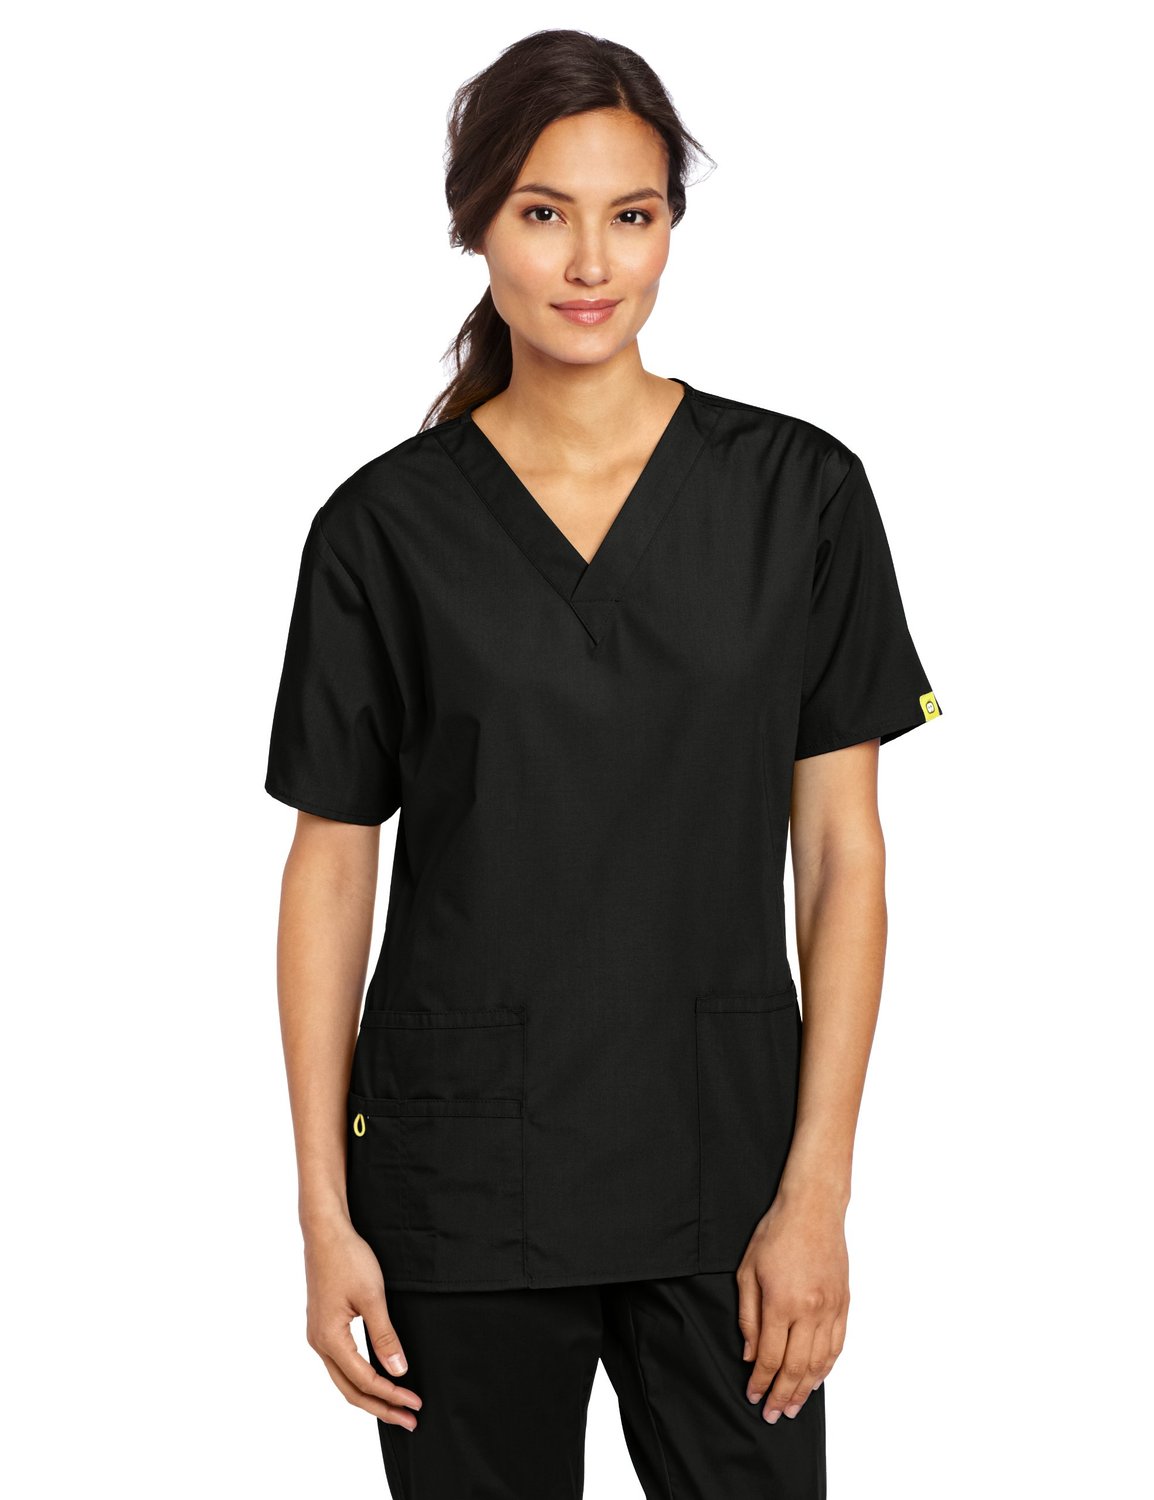 Blue Nurse Uniforms, Rs 500 /uniform, Galaxy Garments 